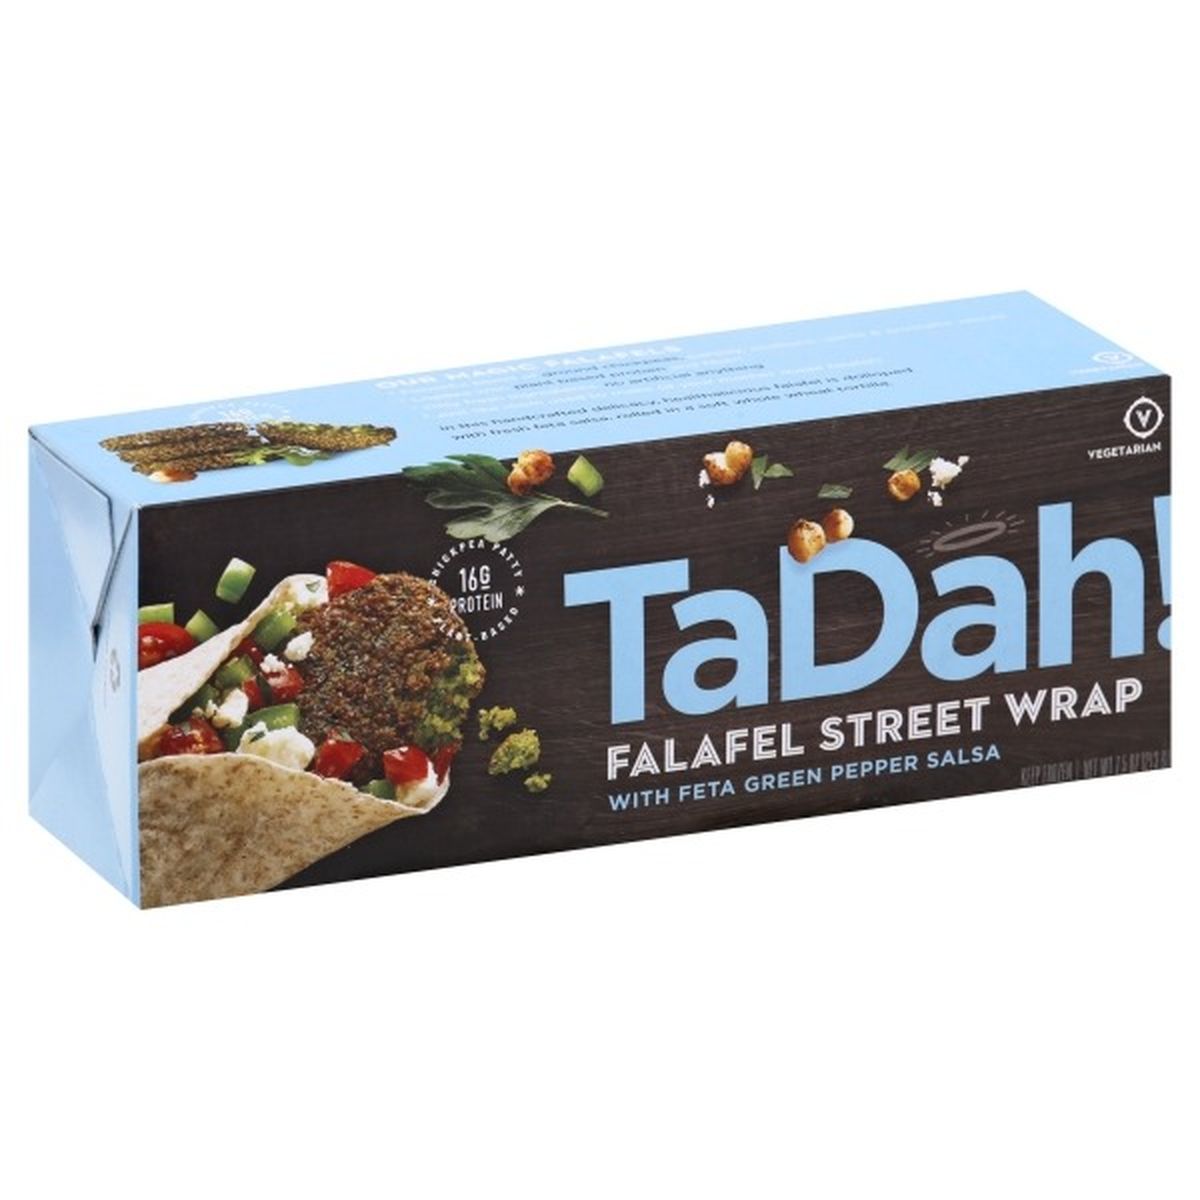 Calories in TaDah Falafel Street Wrap, with Feta Green Pepper Salsa